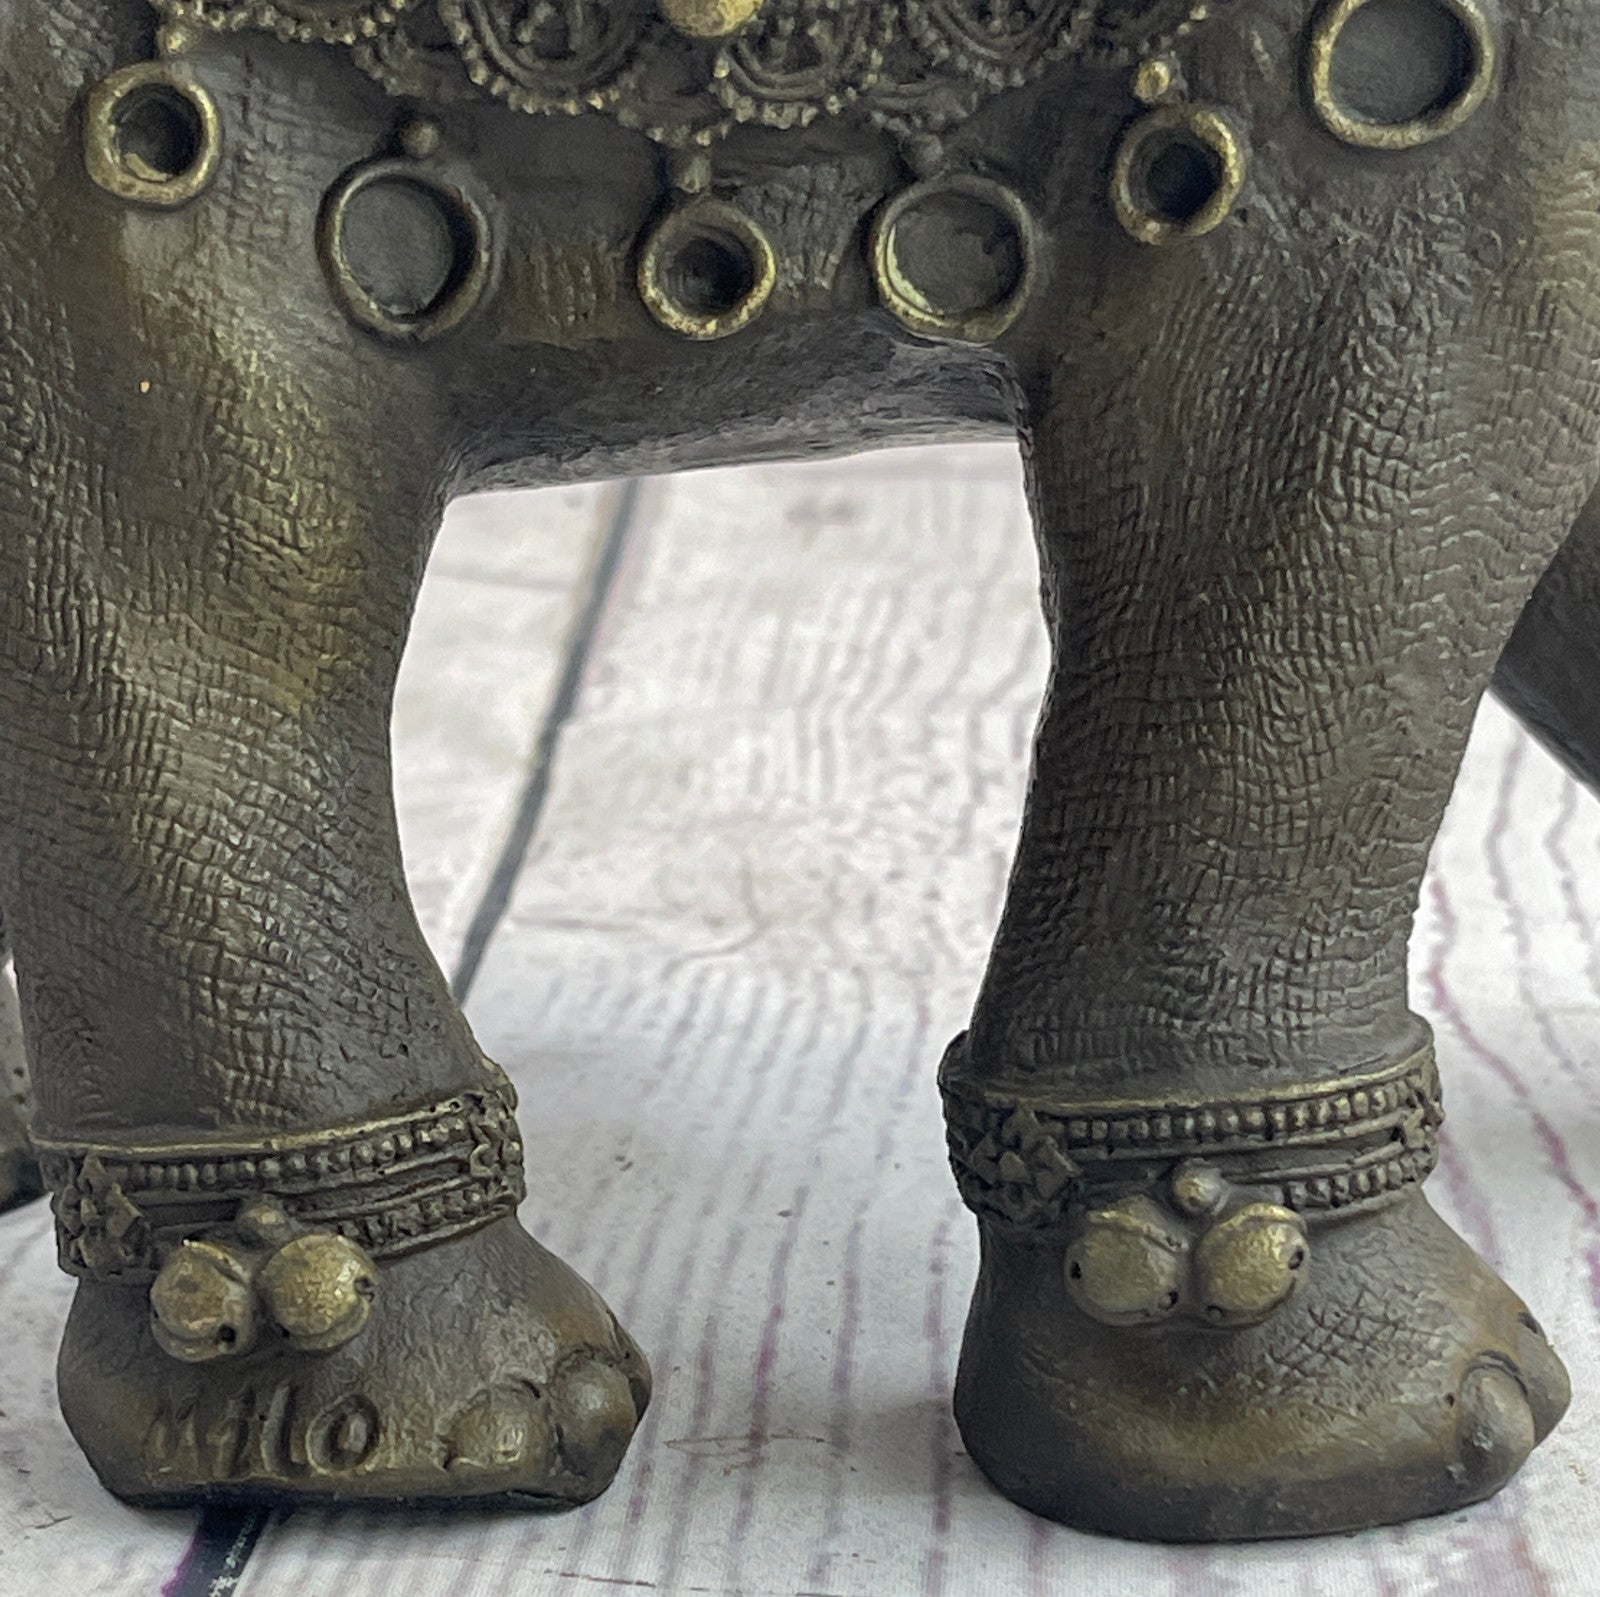 Art Deco Wildlife elephant by Milo Bronze Hot Cast Sculpture Statue Figurine Art